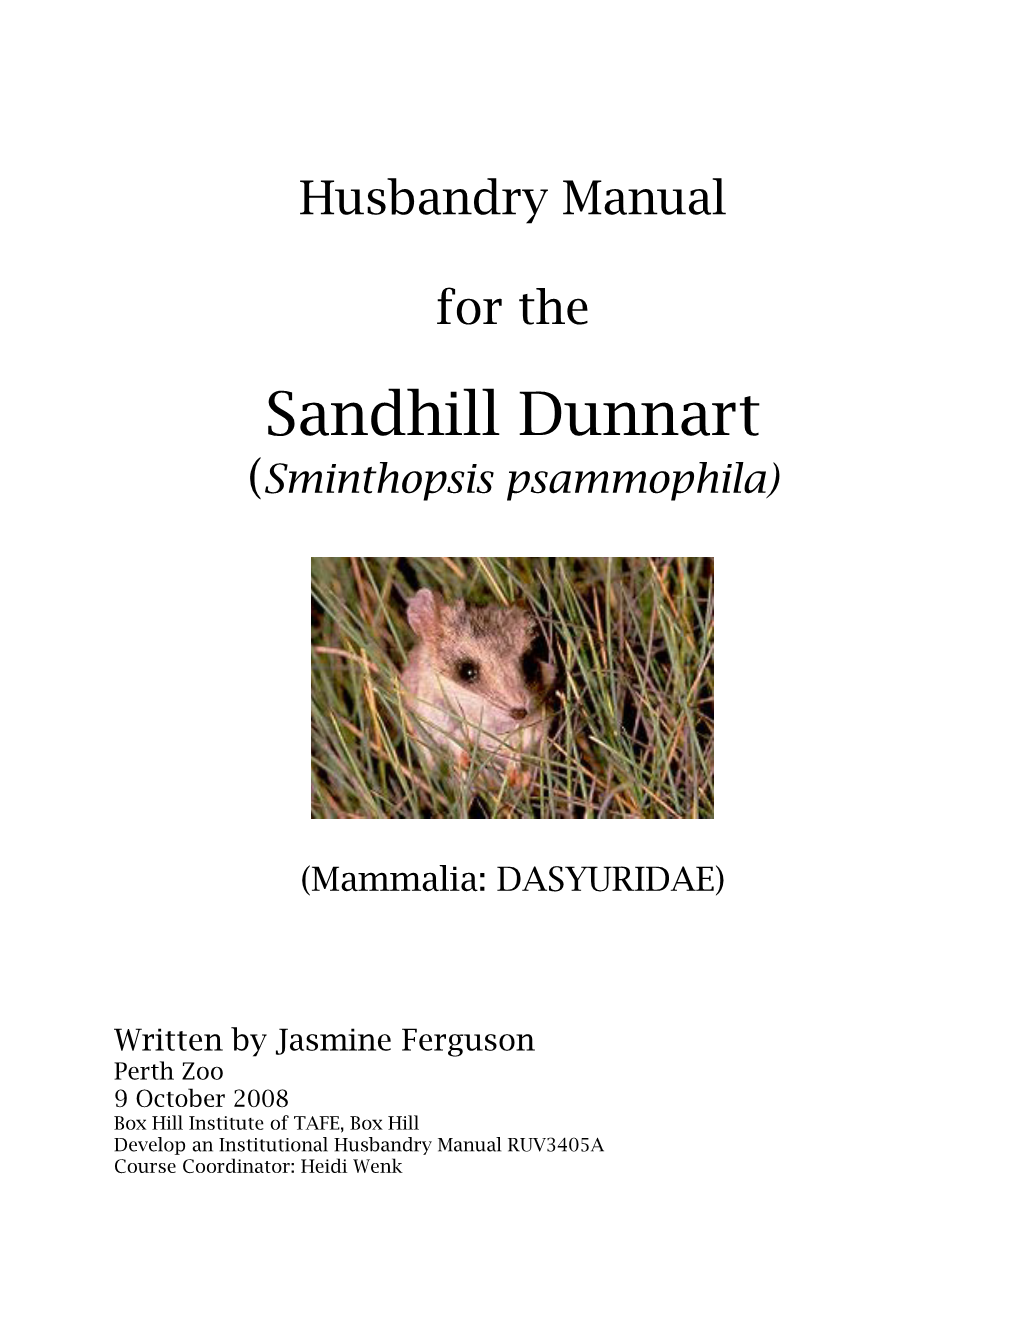 Sandhill Dunnart (Sminthopsis Psammophila)